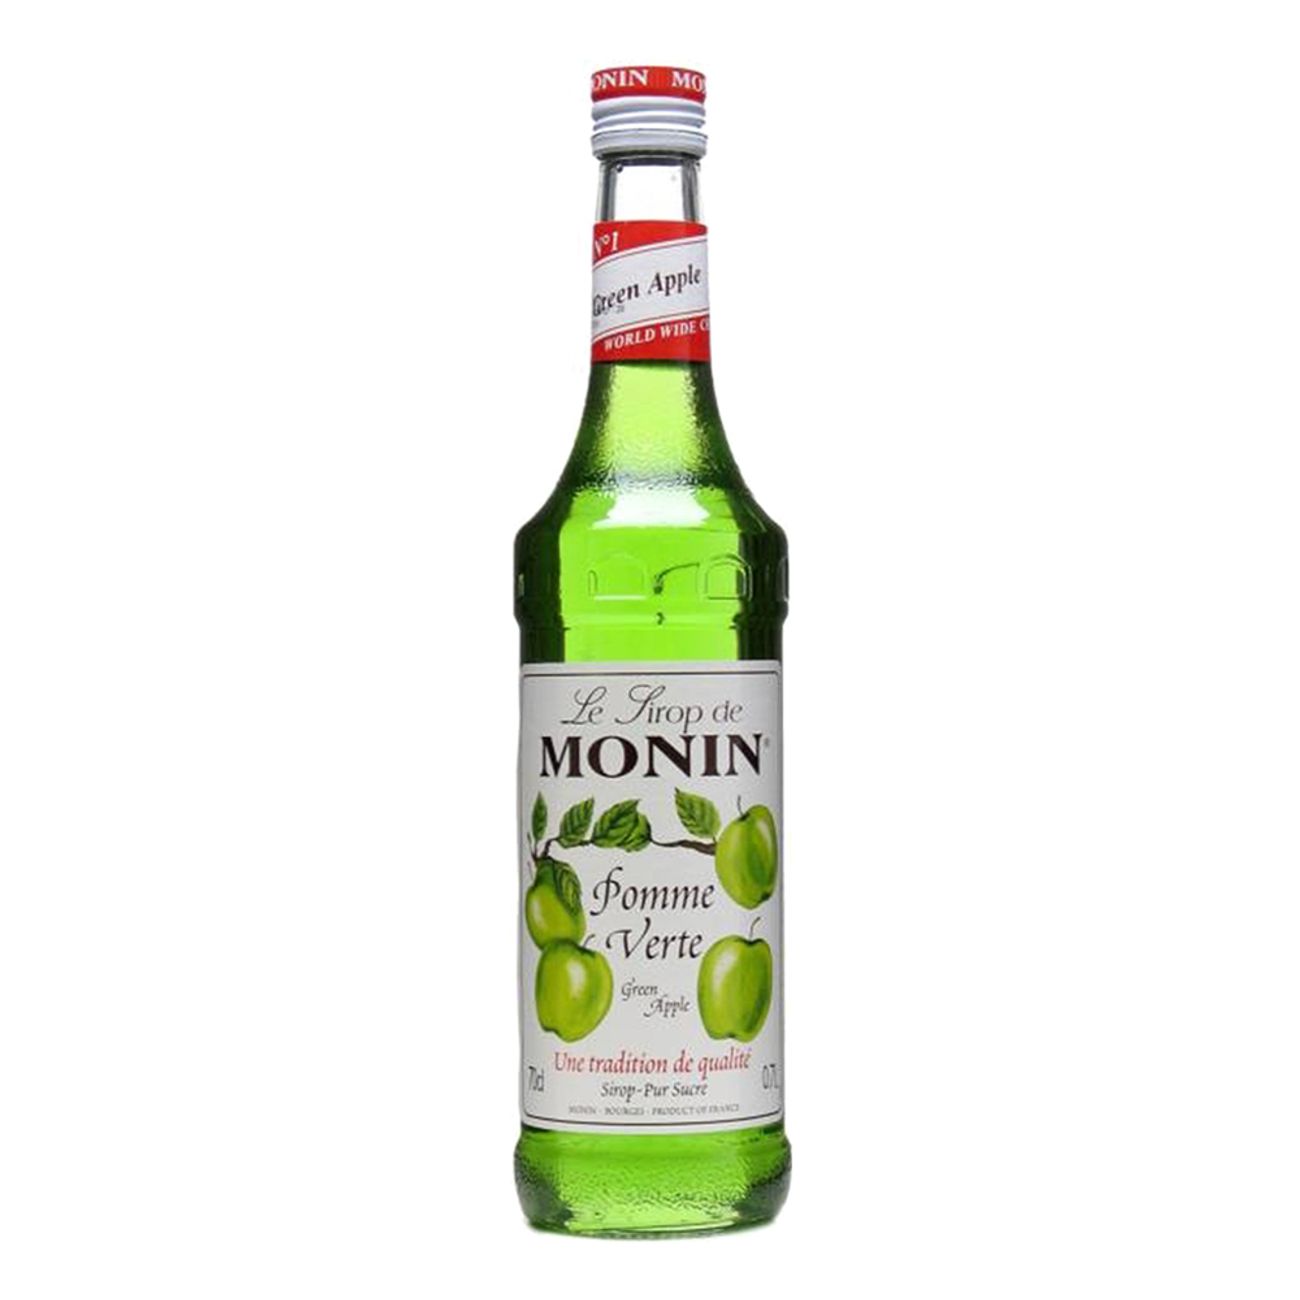 monin-gront-apple-drinkmix-1